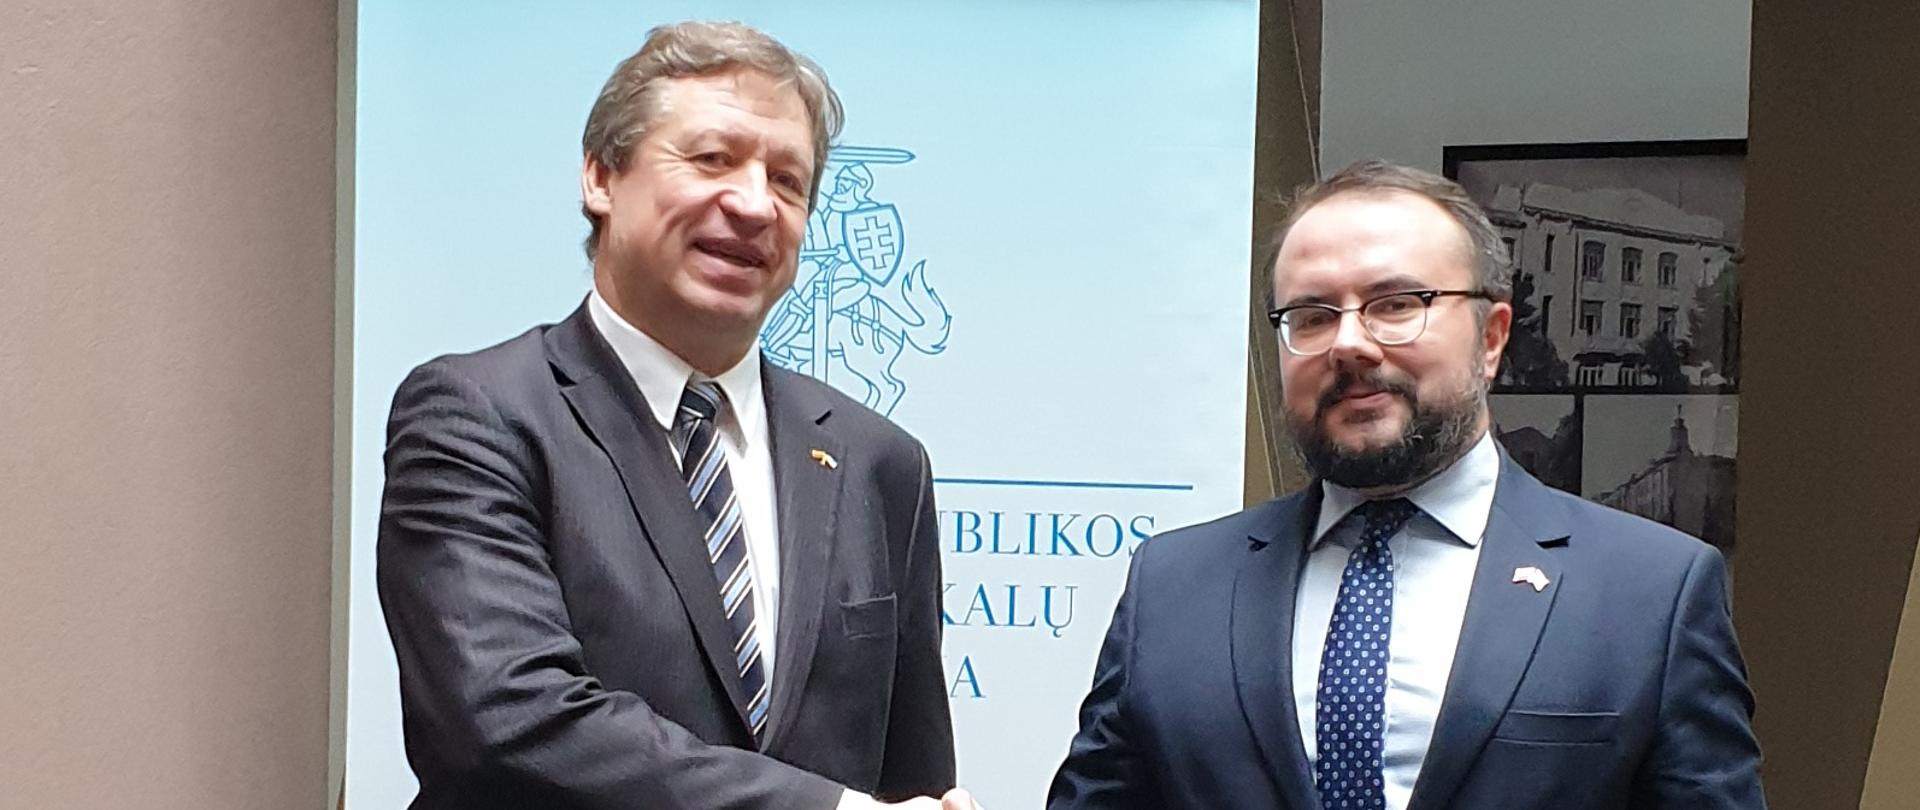 Deputy Minister Jabłoński met with Lithuania’s Deputy Foreign Minister Raimundas Karoblis